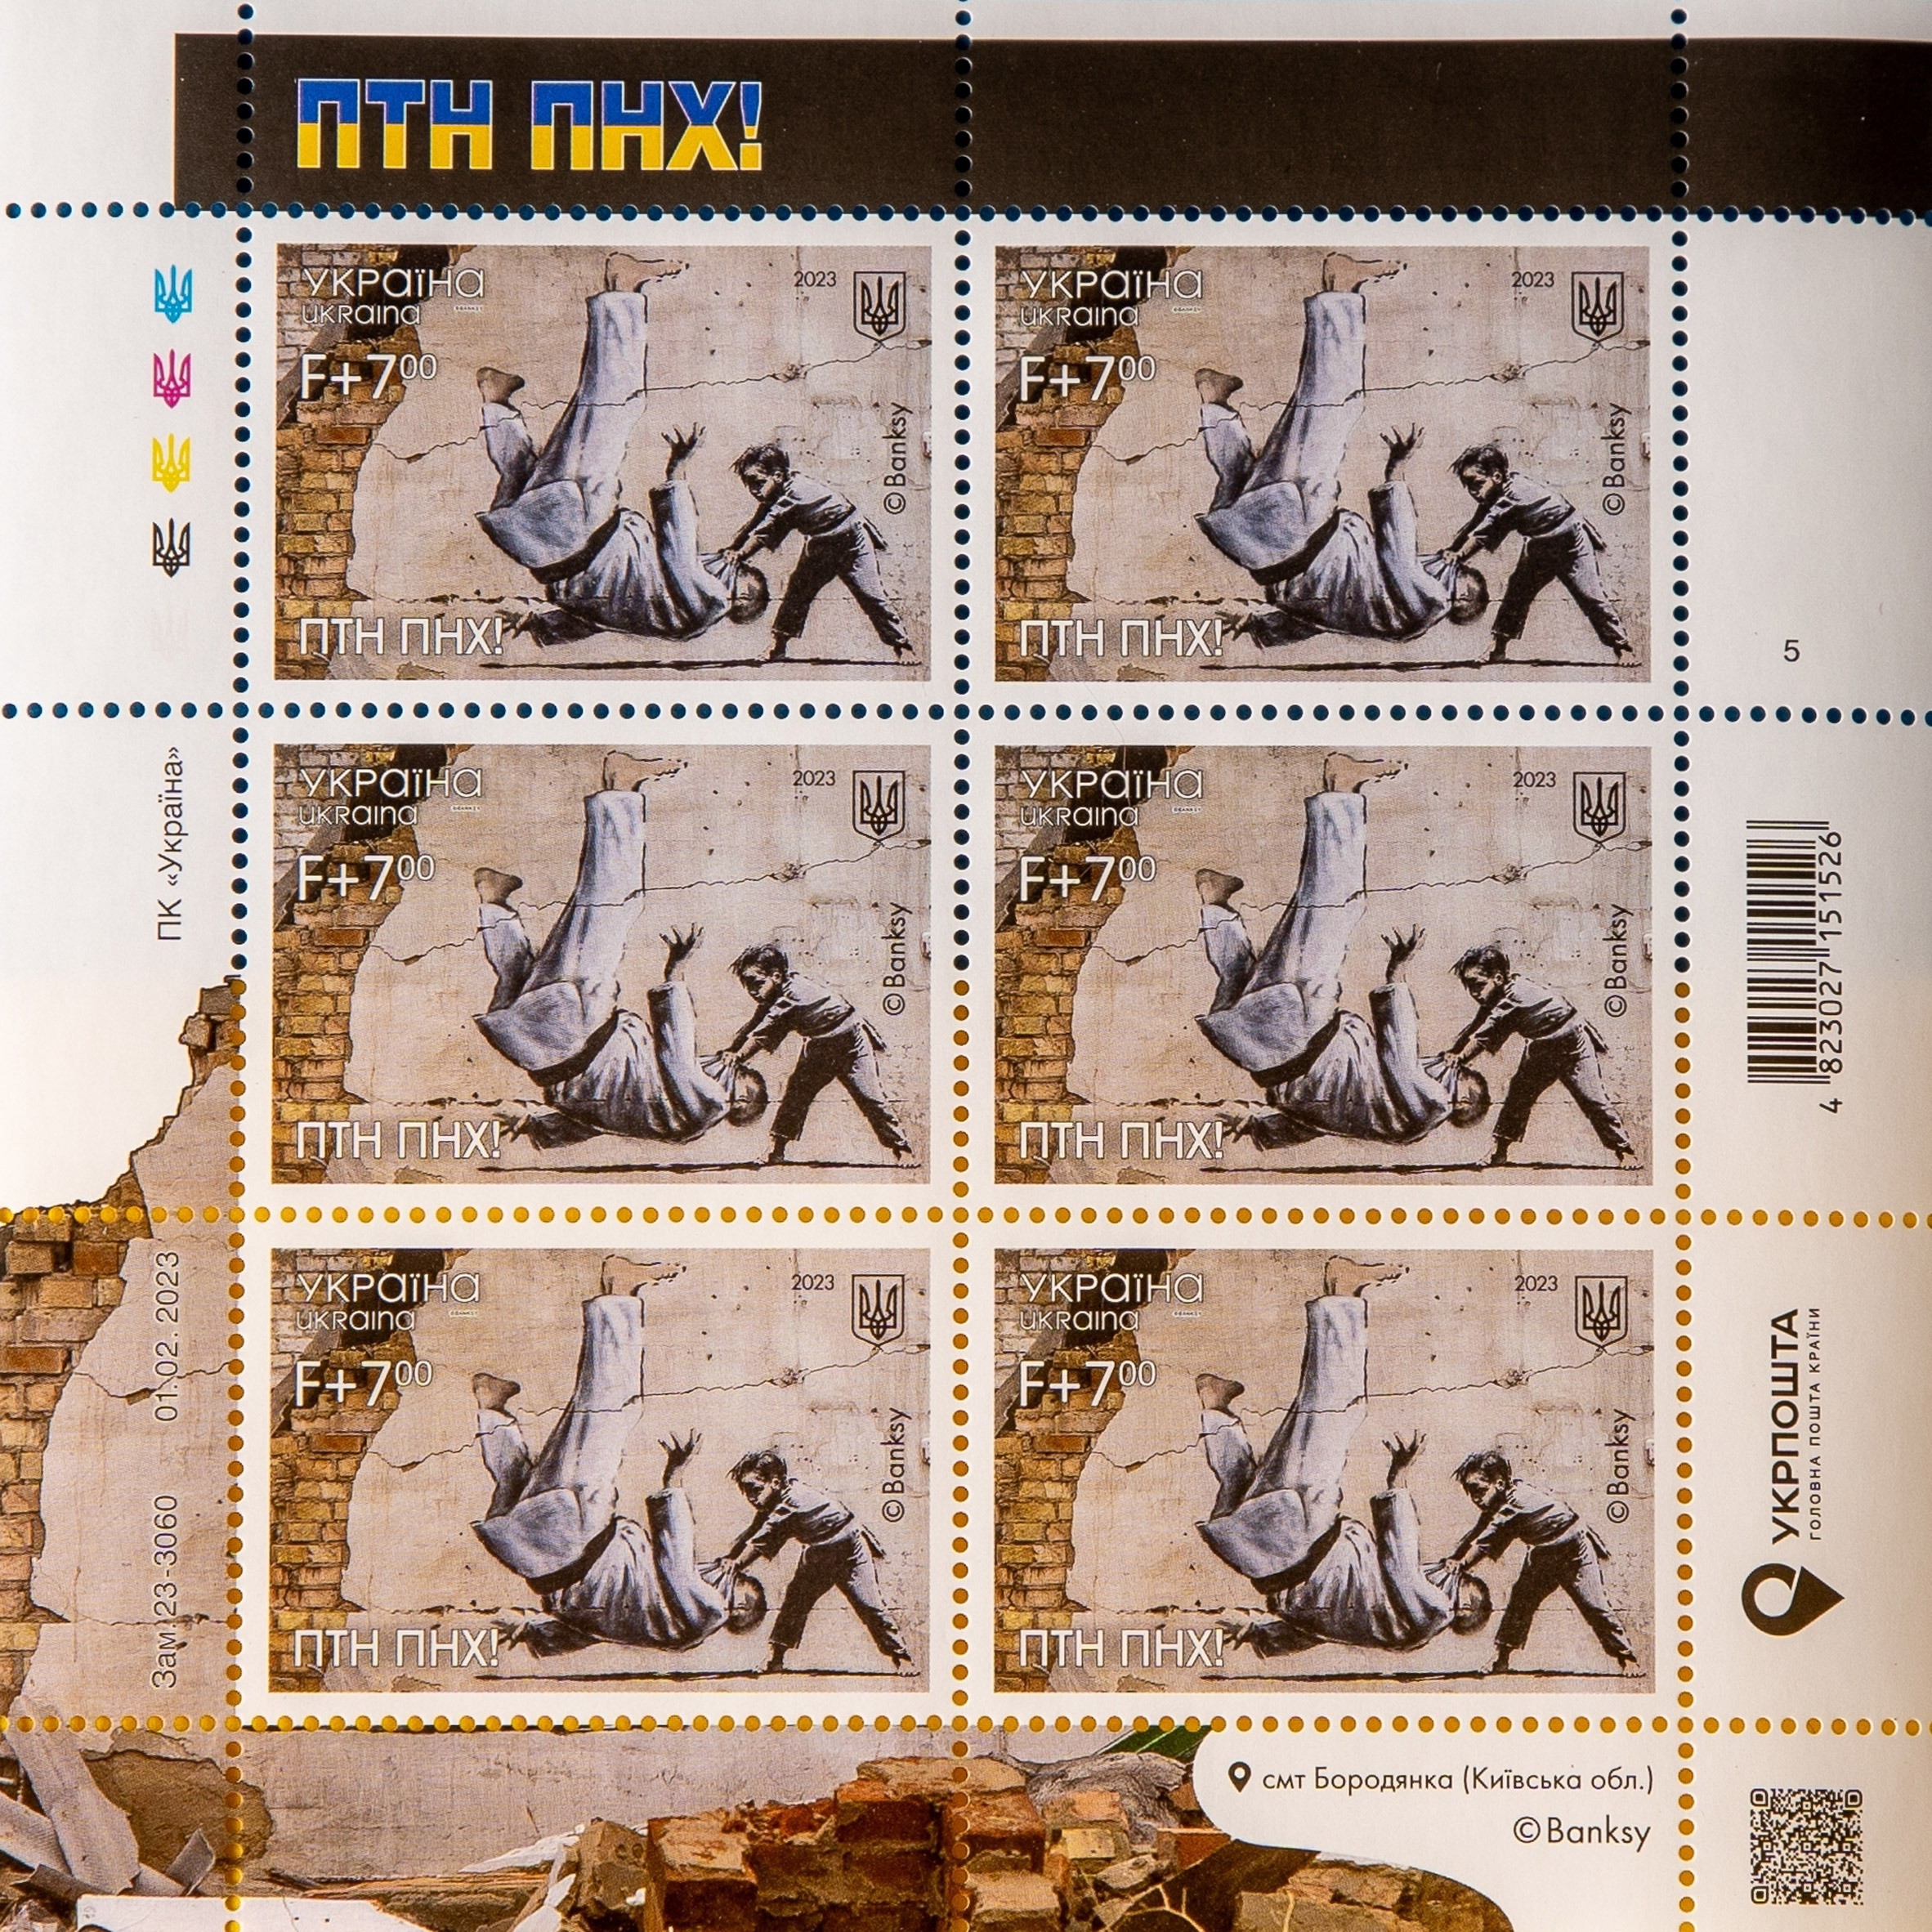 Ukraine issues postage stamp featuring prophetic Banksy artwork